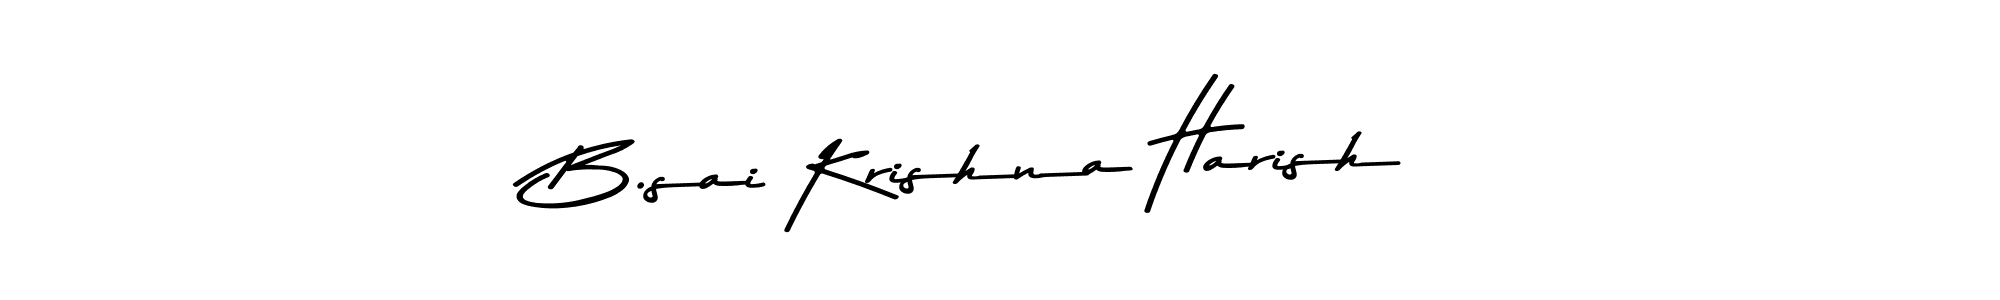 B.sai Krishna Harish stylish signature style. Best Handwritten Sign (Asem Kandis PERSONAL USE) for my name. Handwritten Signature Collection Ideas for my name B.sai Krishna Harish. B.sai Krishna Harish signature style 9 images and pictures png